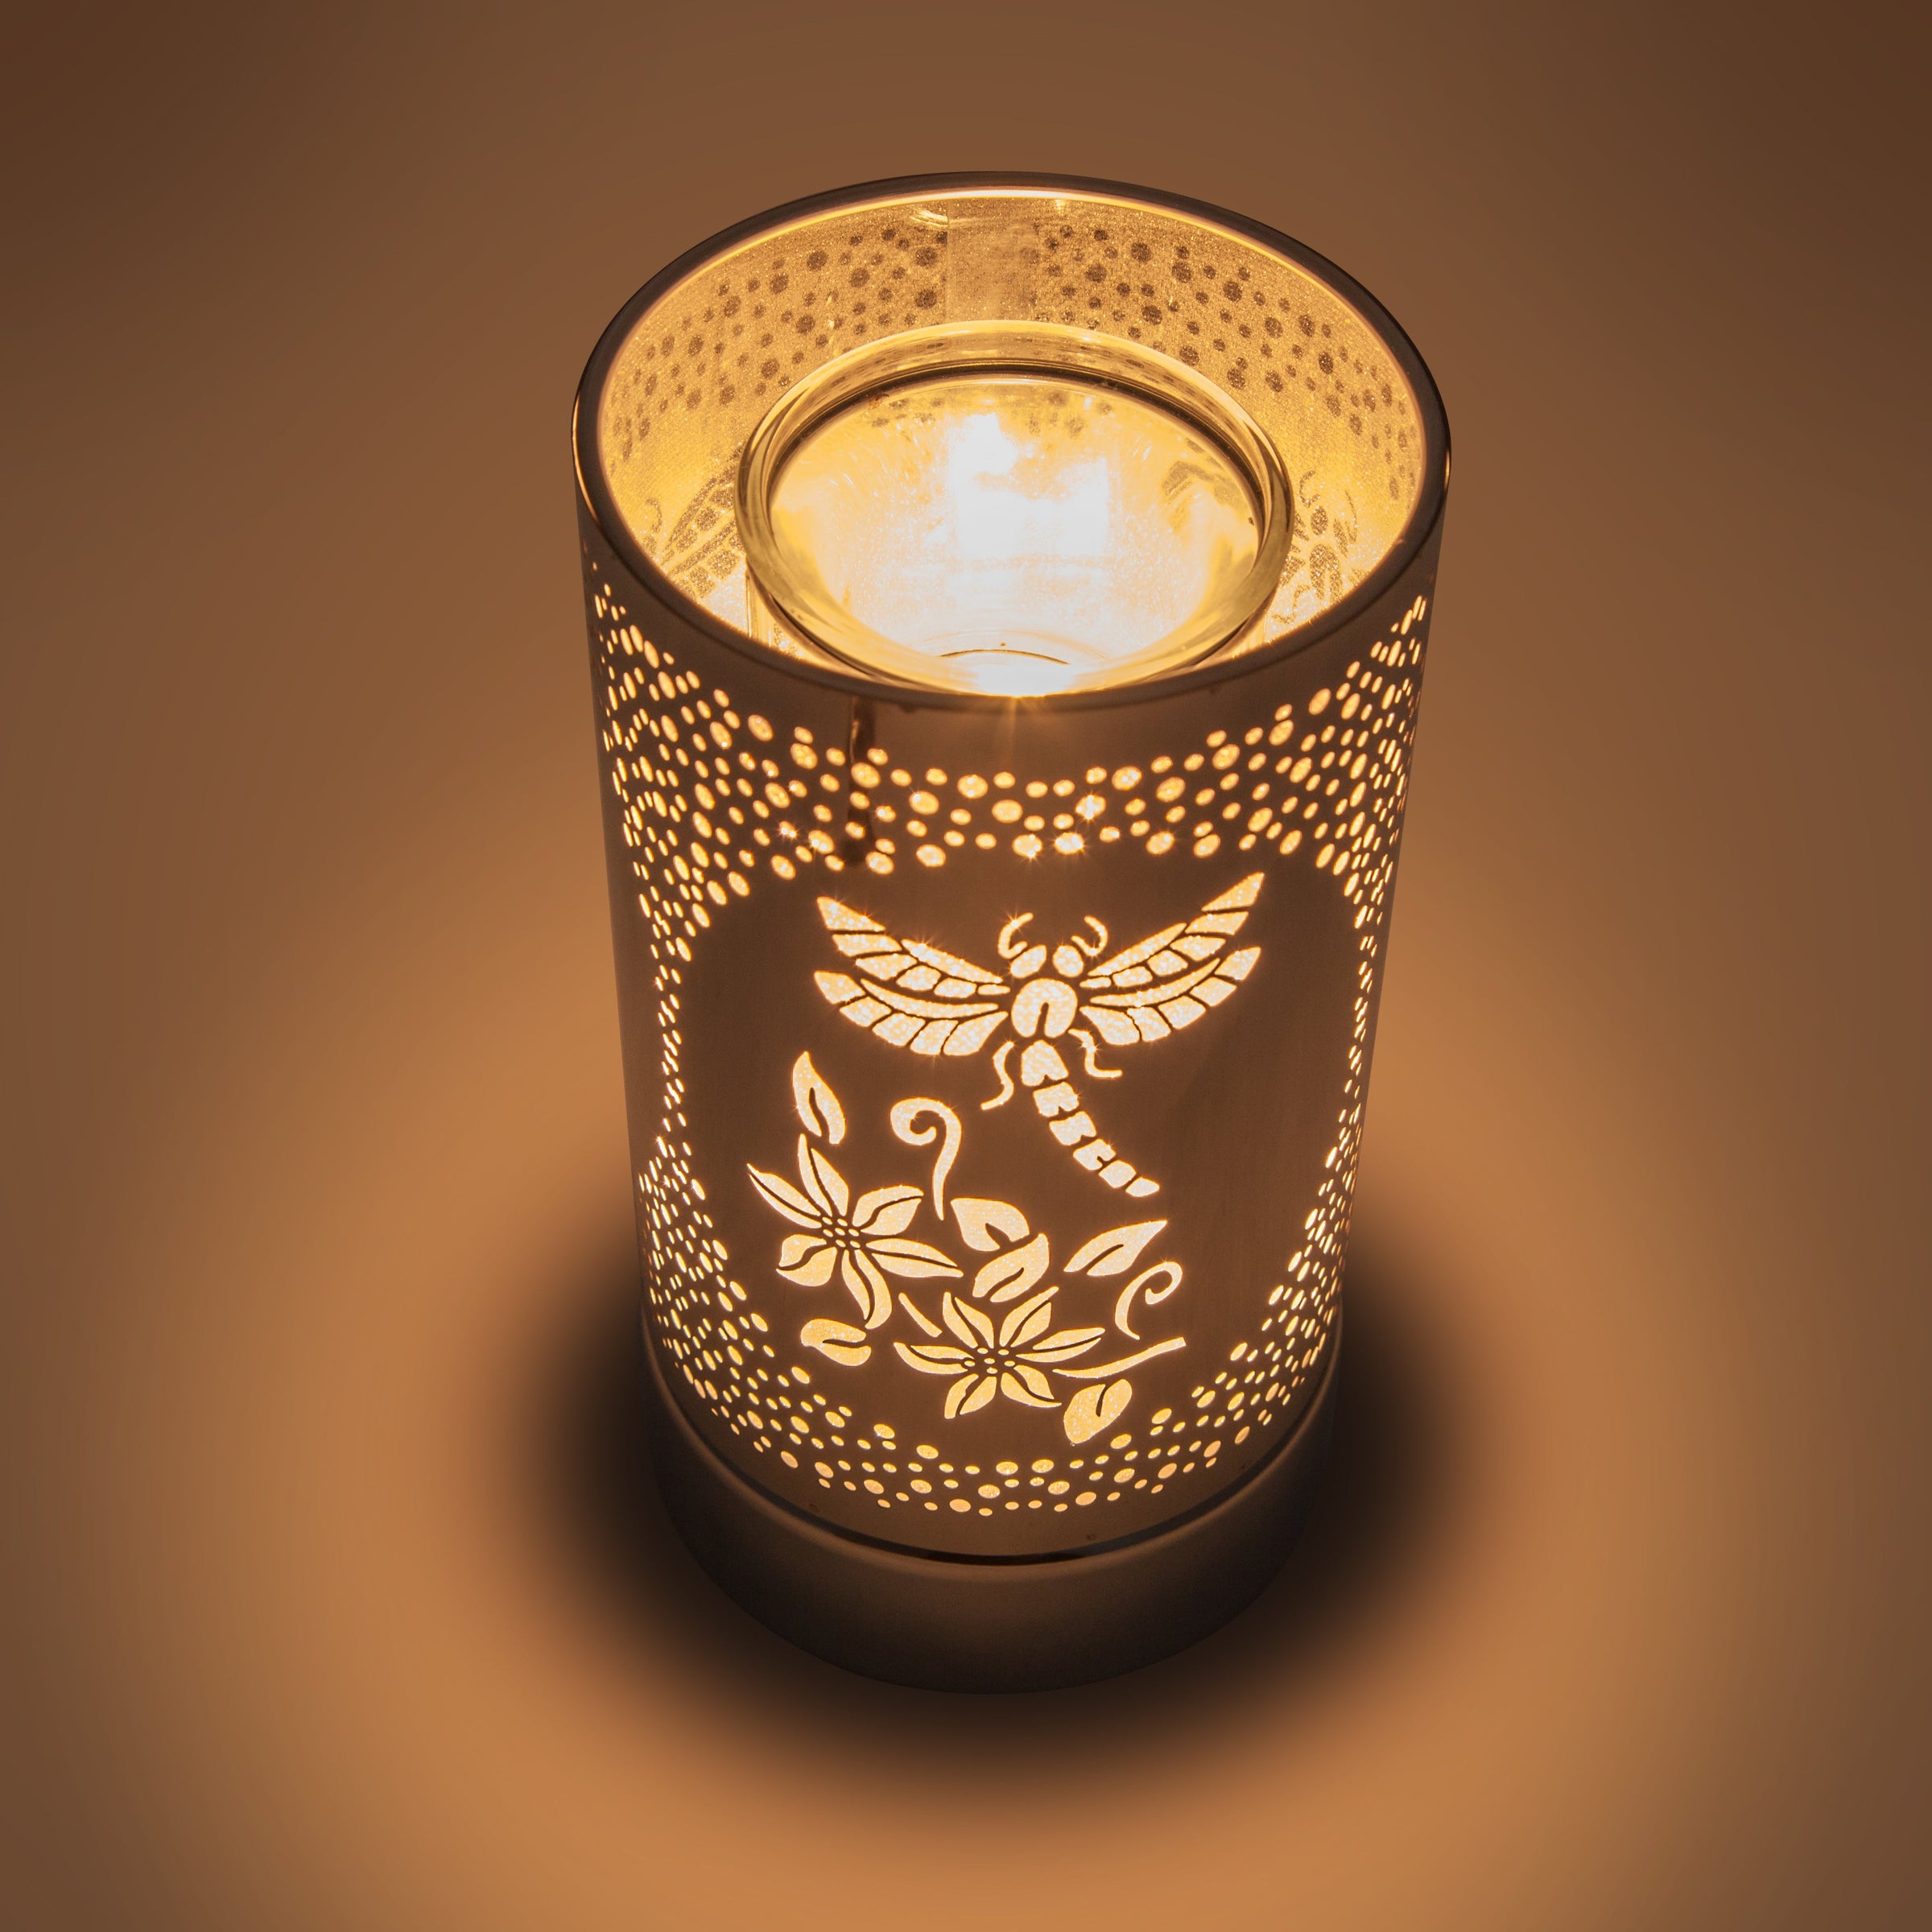 Bronze Leaf 2 in 1 wax melter - Pet Safe Candles